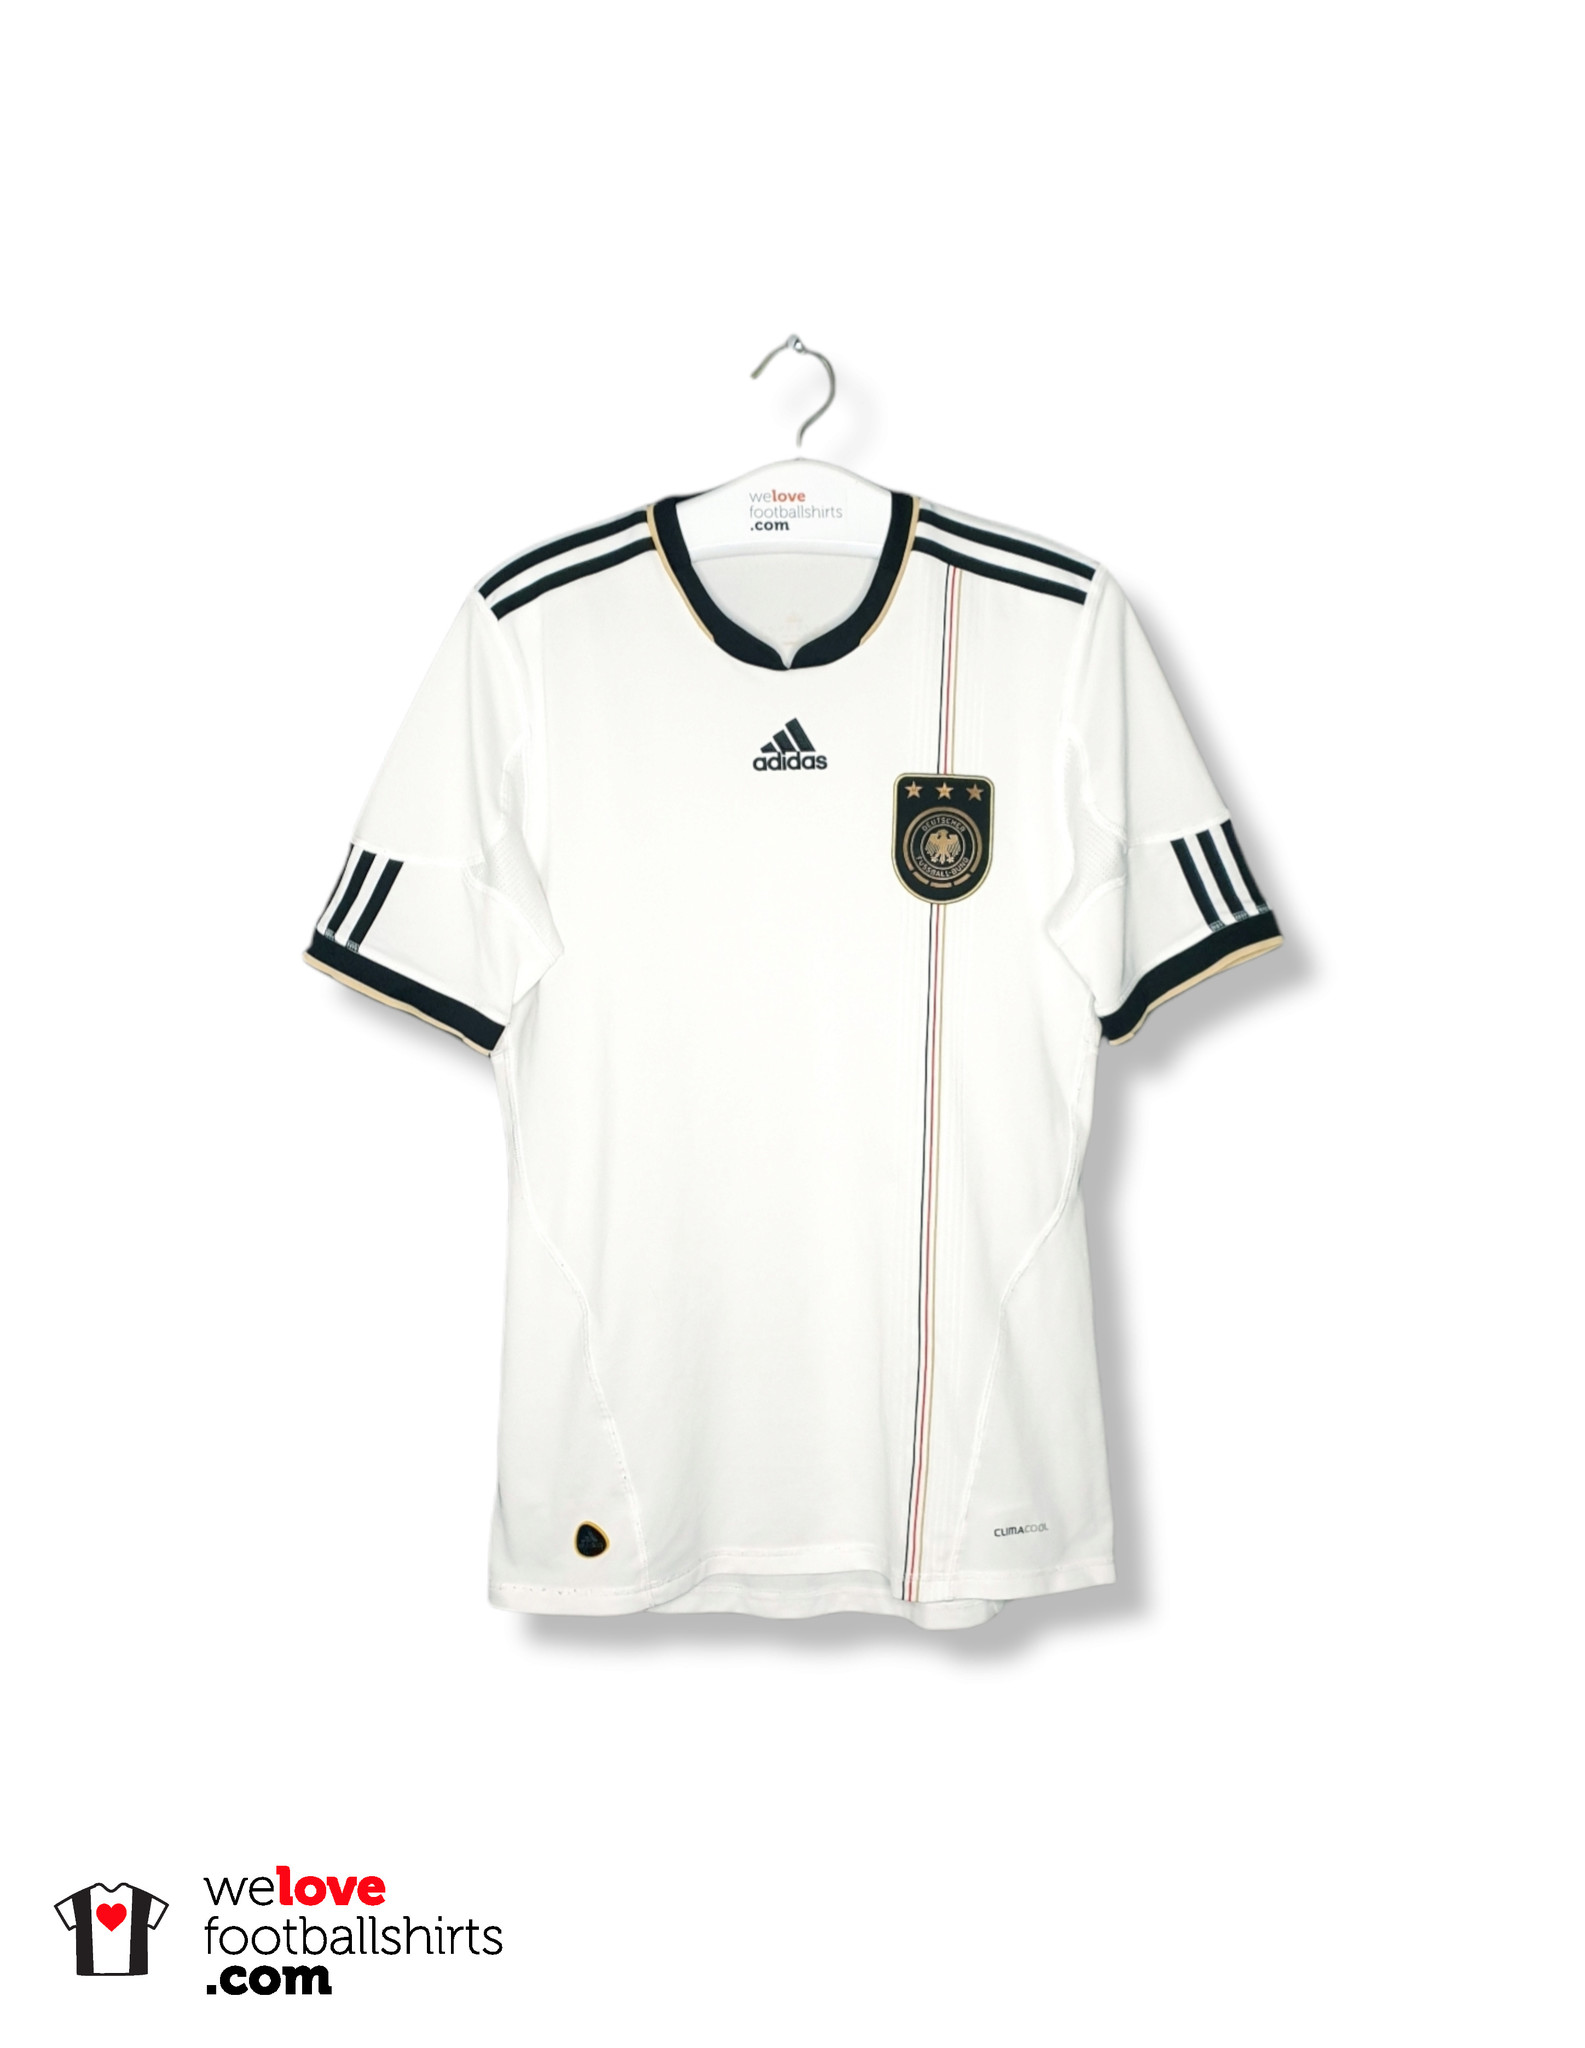 Adidas voetbalshirt World Cup 2010 -